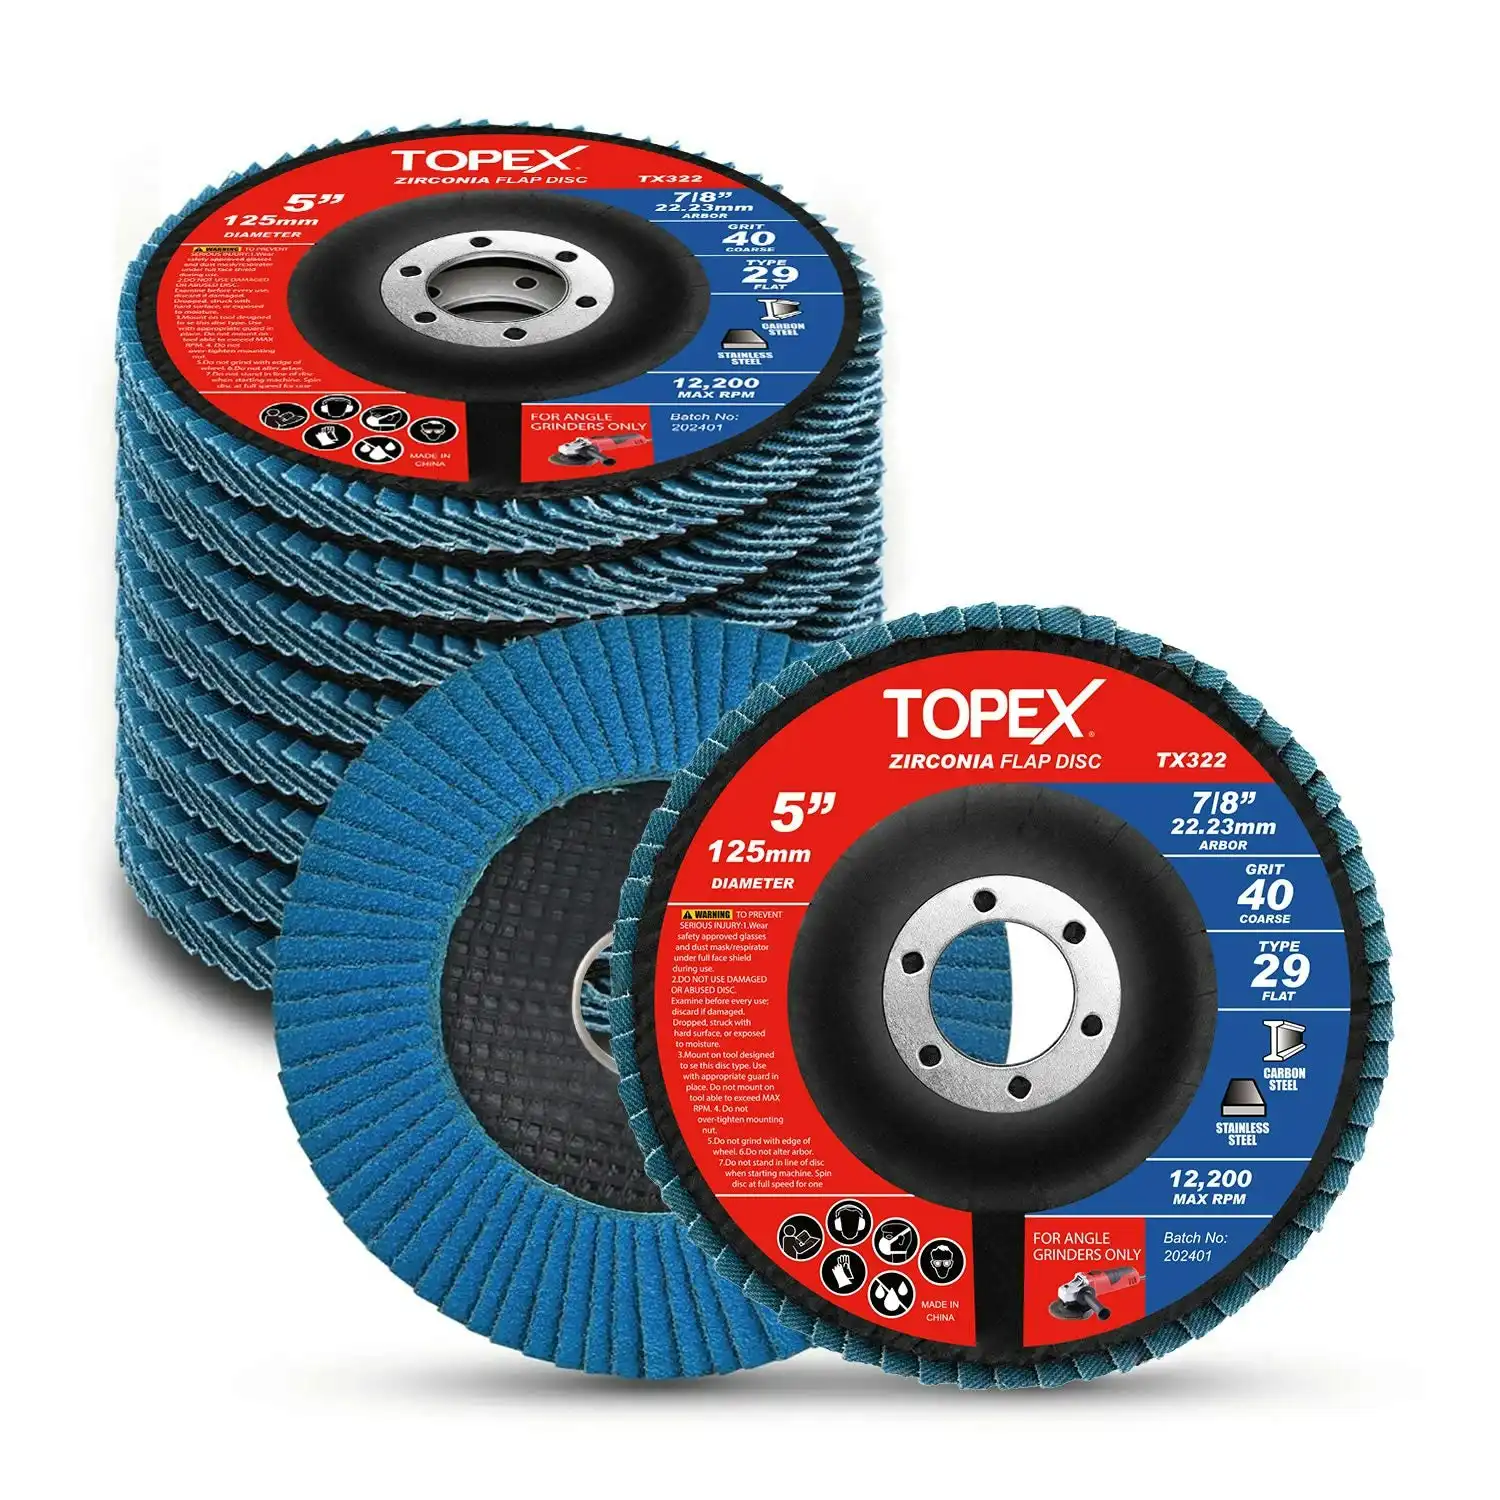 Topex 125mm Zirconia Flap Disc, 40/60/80/120 Grit, 10Pack